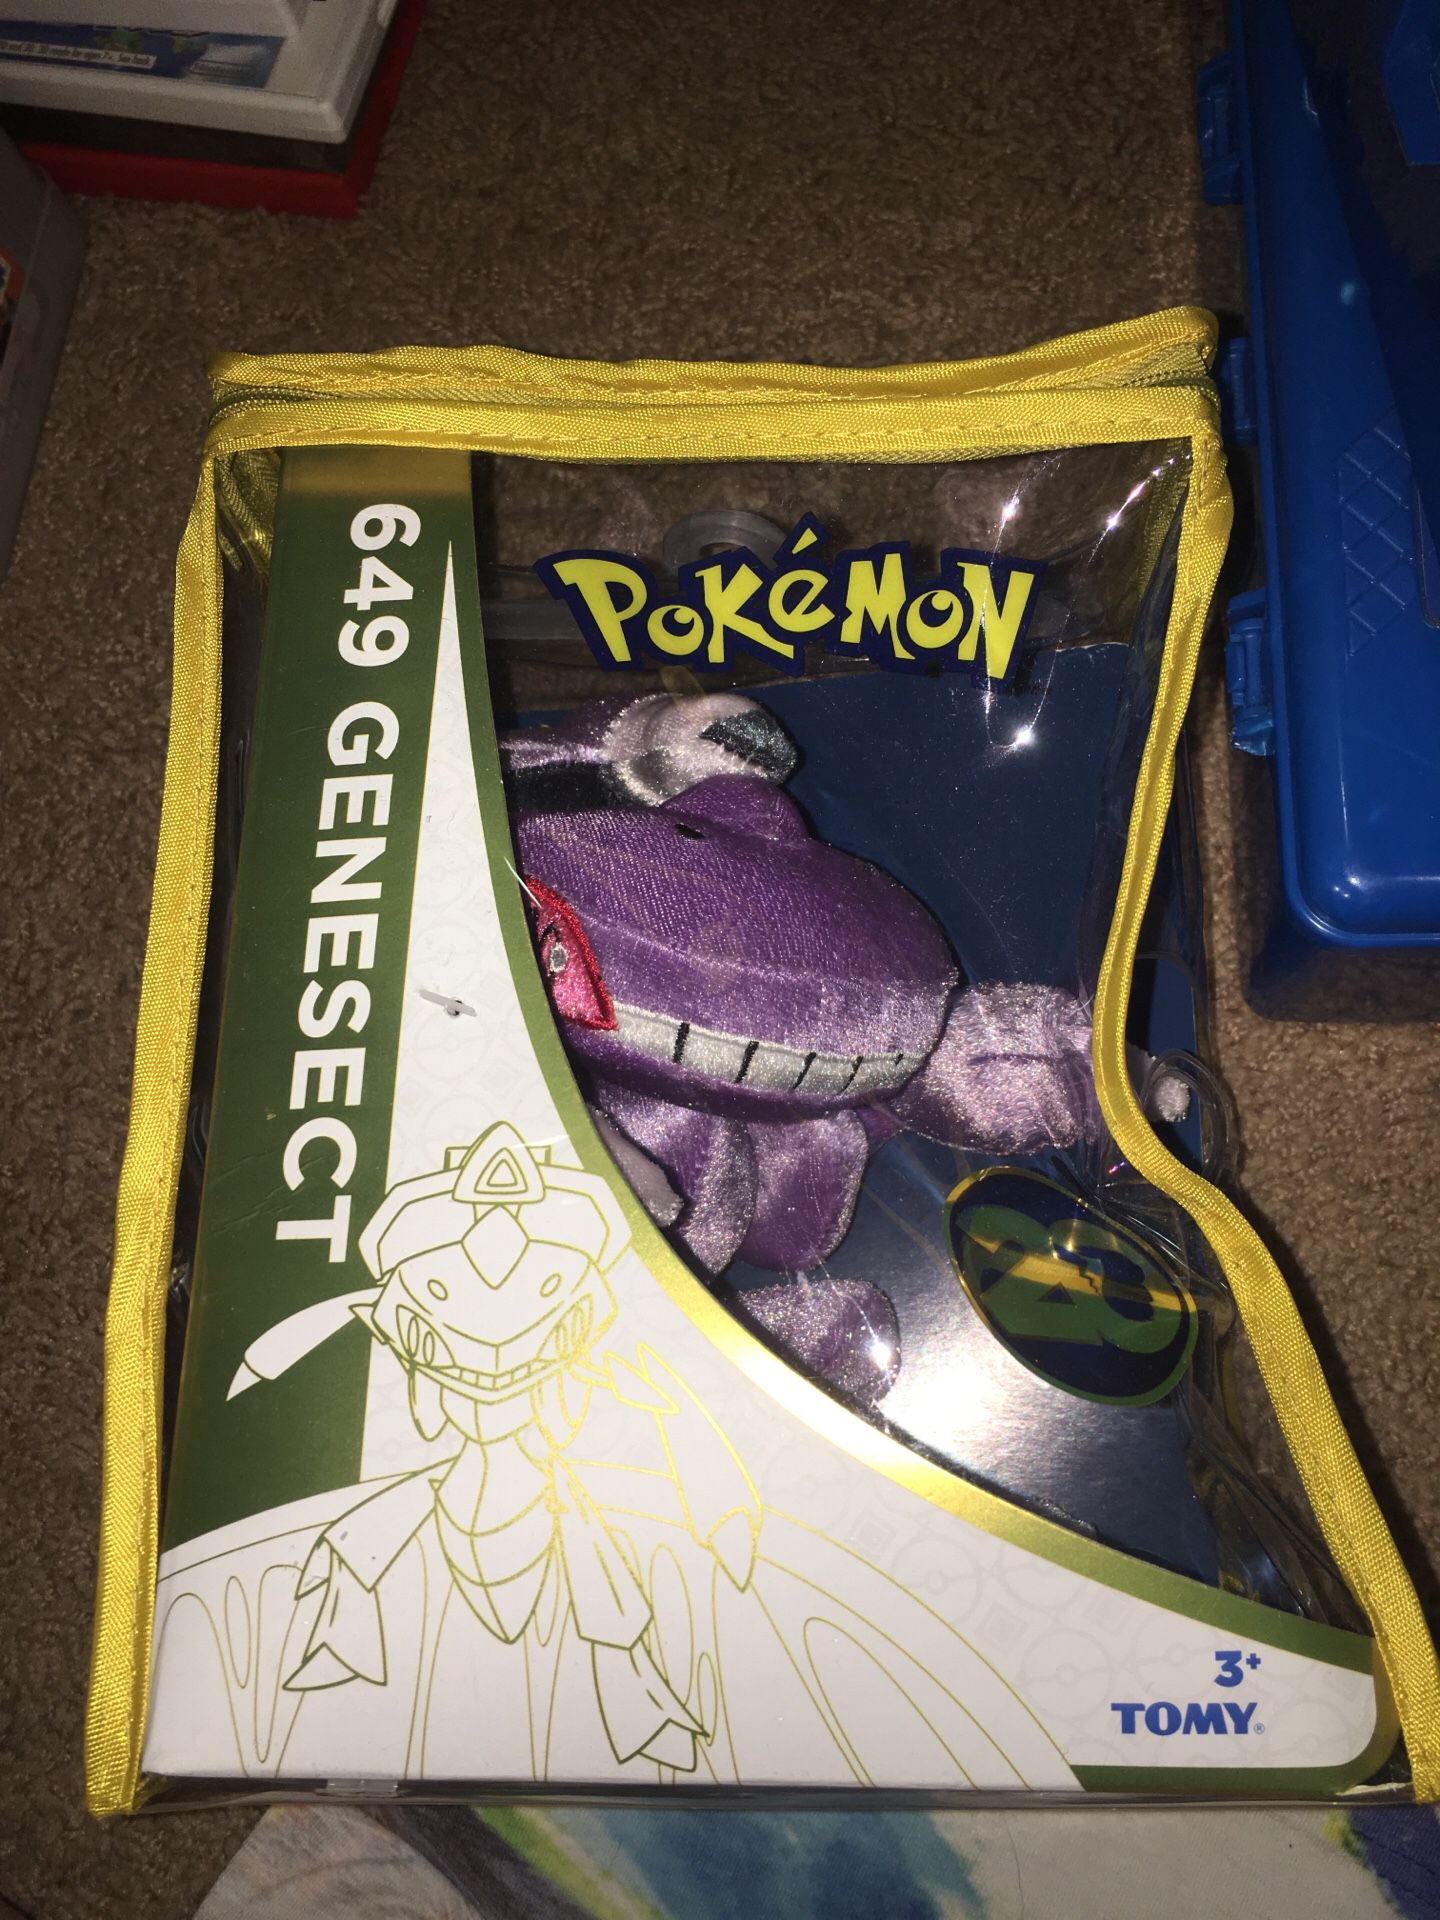 Genesect 20th anniversary Pokemon plush